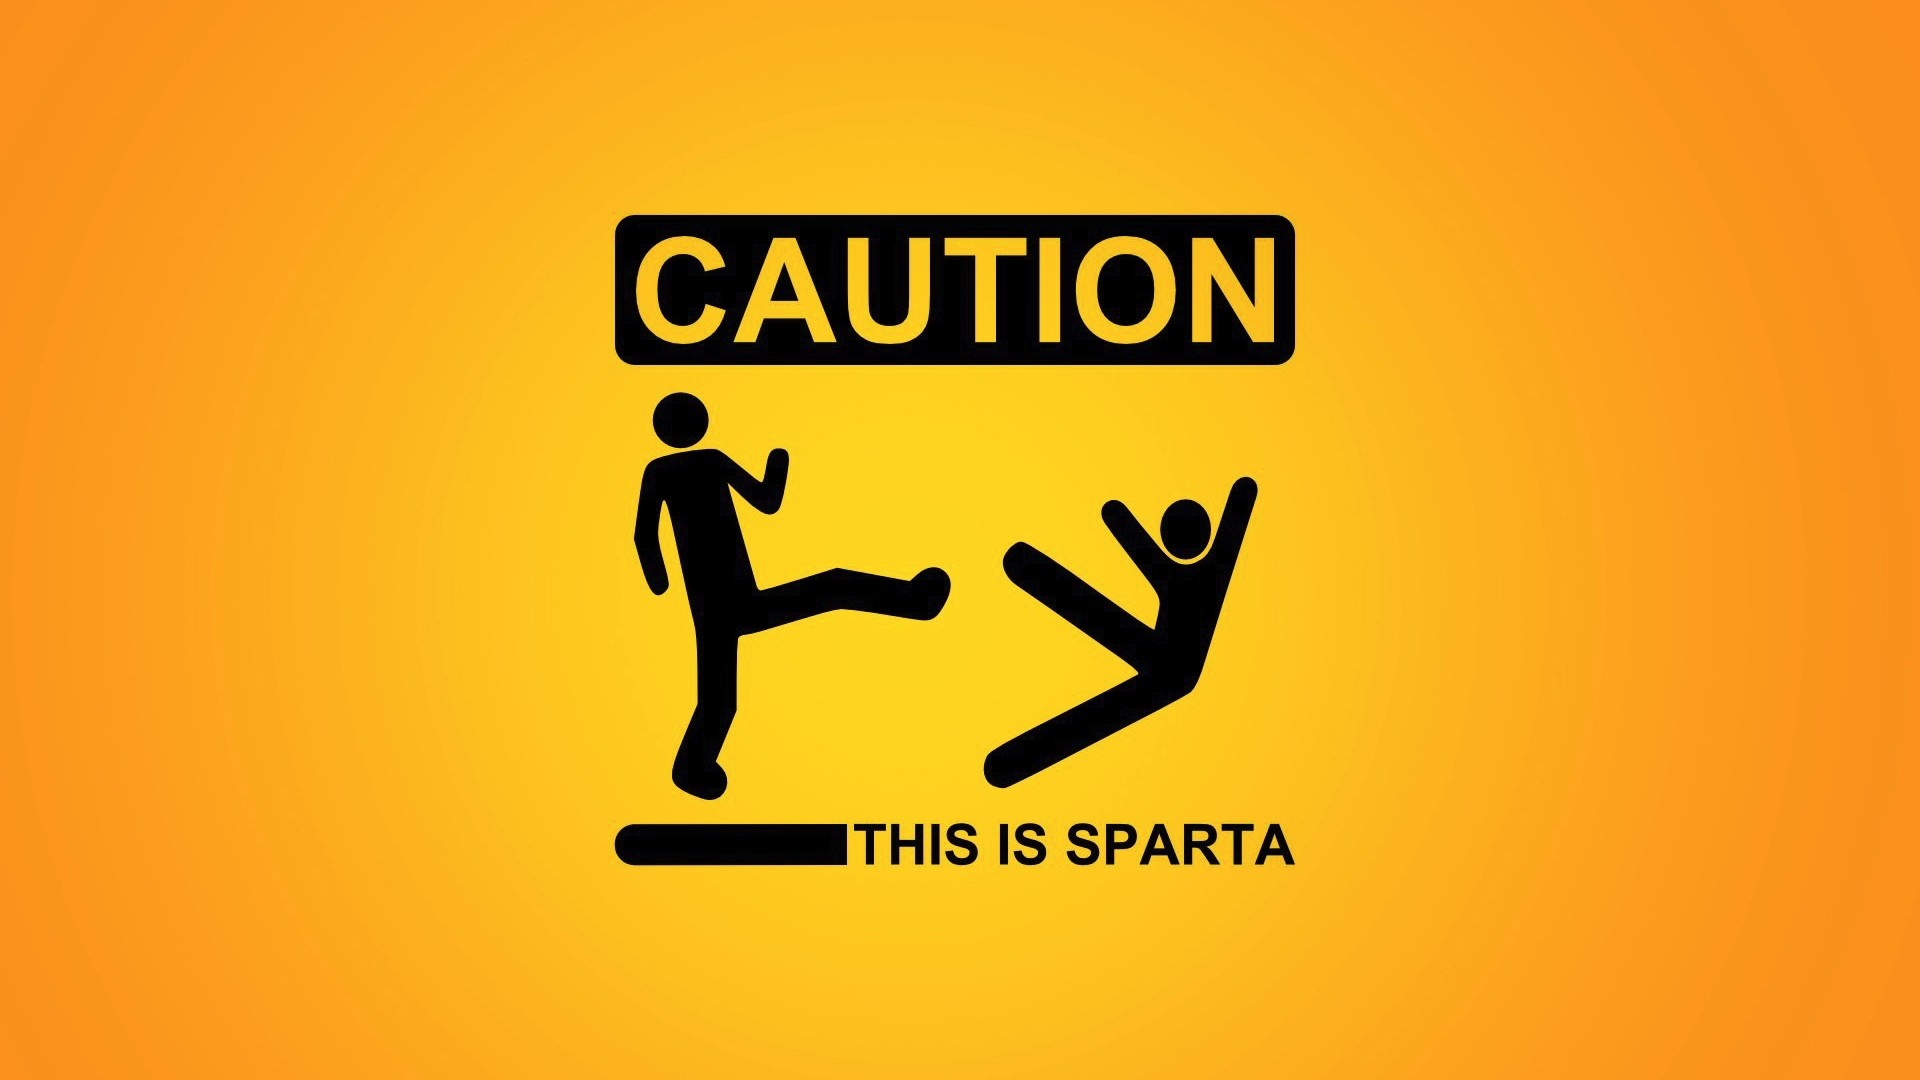 Sparta Simple Background Humor Minimalism Digital Art 1920x1080